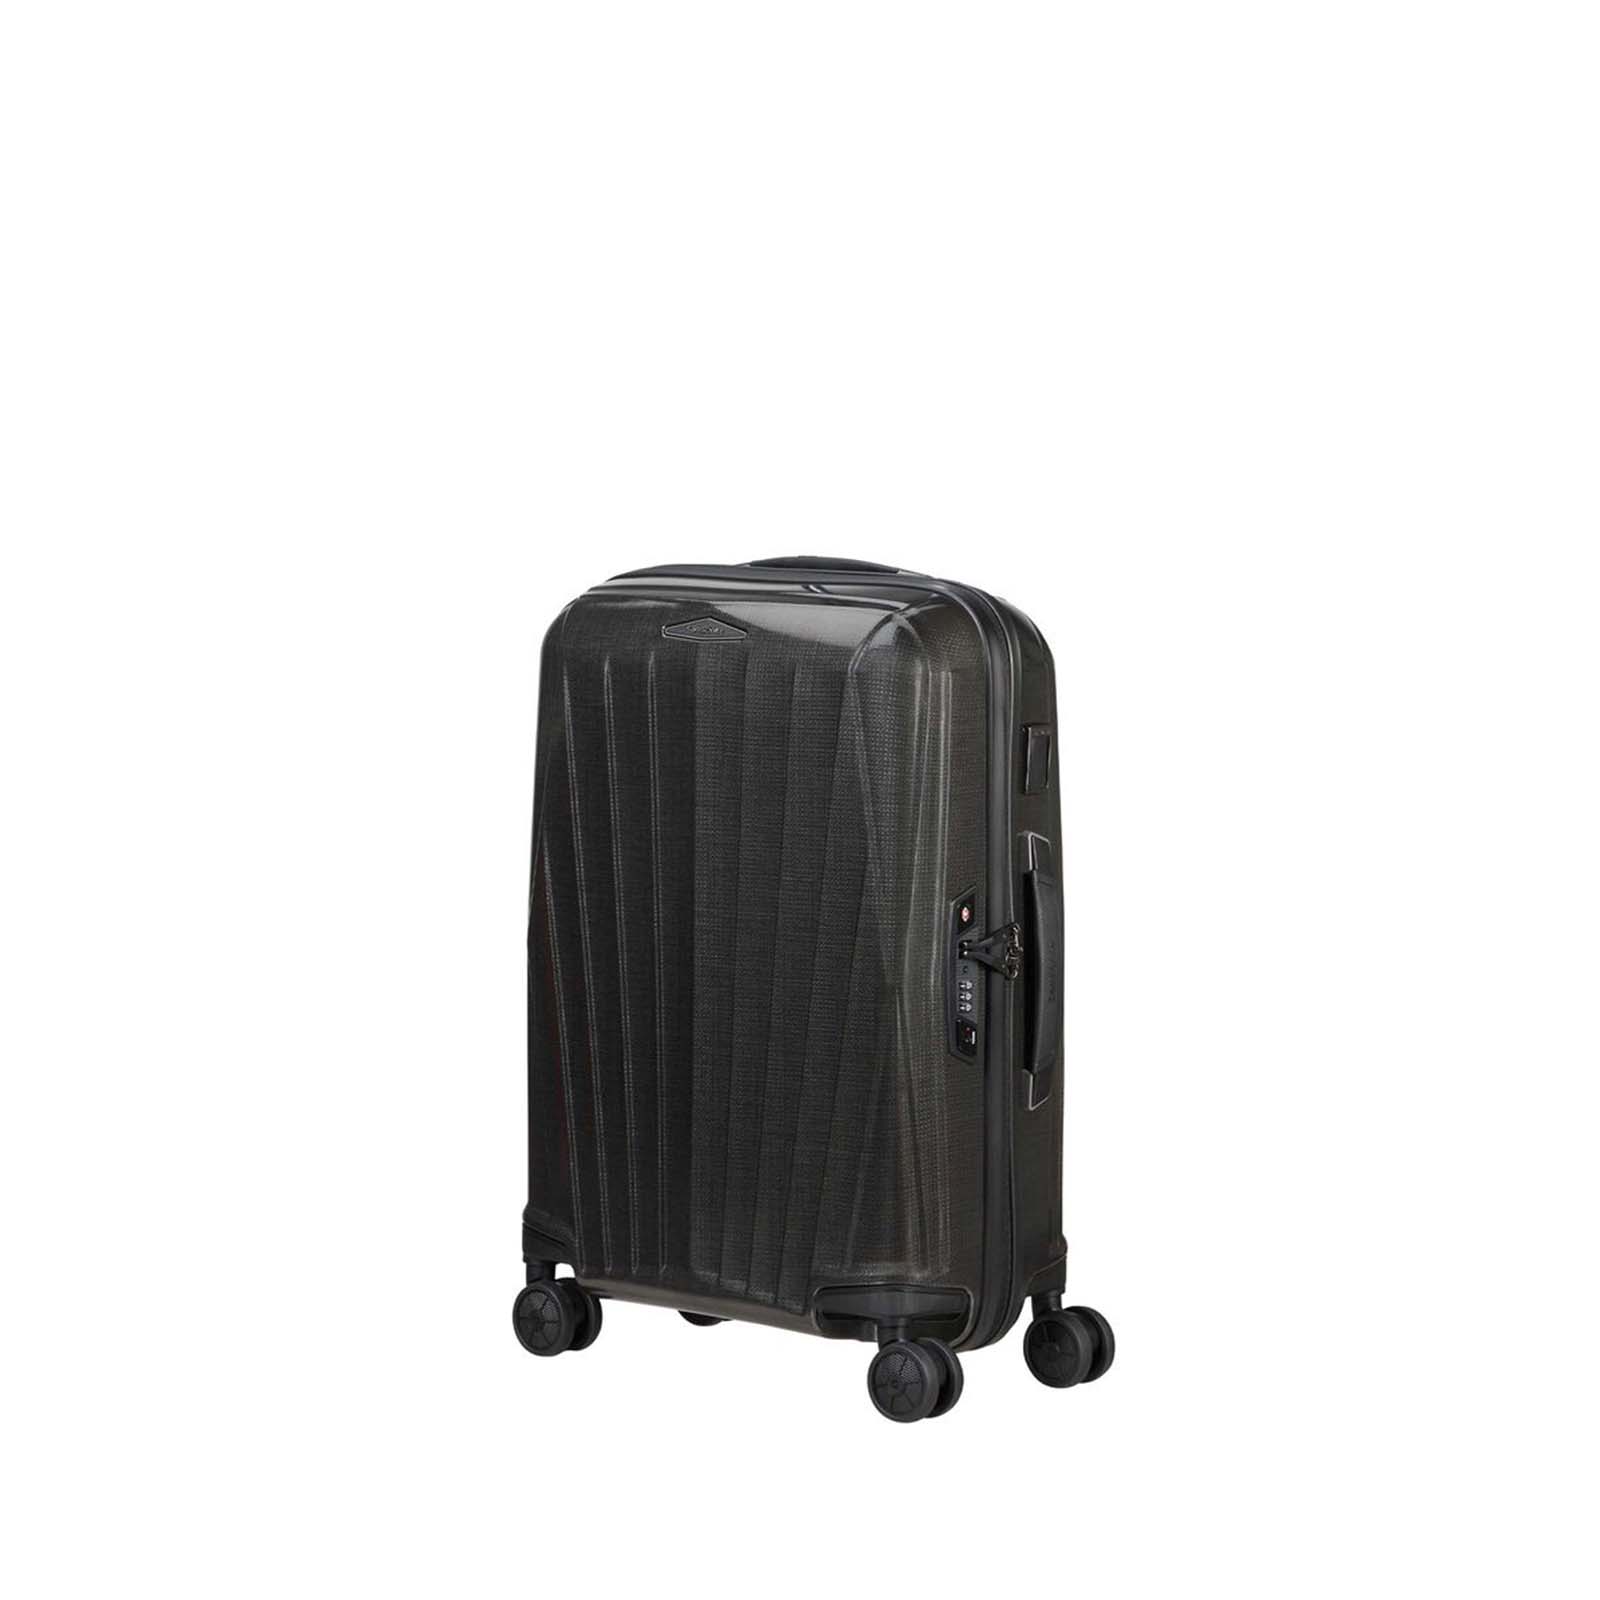 Samsonite-Major-Lite-55cm-Suitcase-Black-Front-Angle